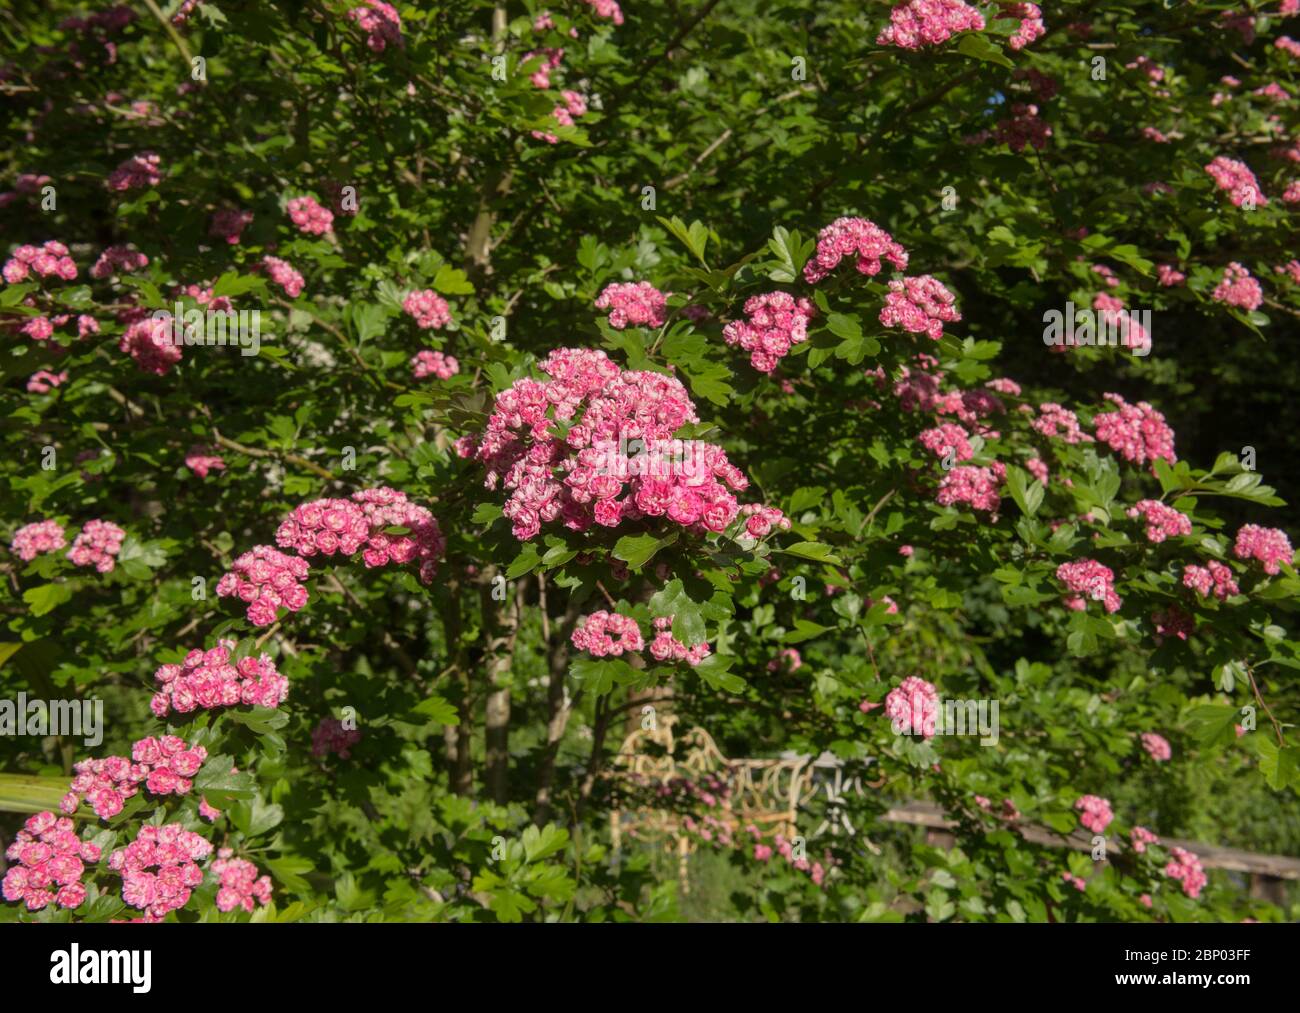 Spring Flowering of the Deciduous Double Pink Hawthorn Tree (Crataegus laevigata 'Rosea Flore Pleno') in a Woodland Garden in Rural Devon, England, UK Stock Photo